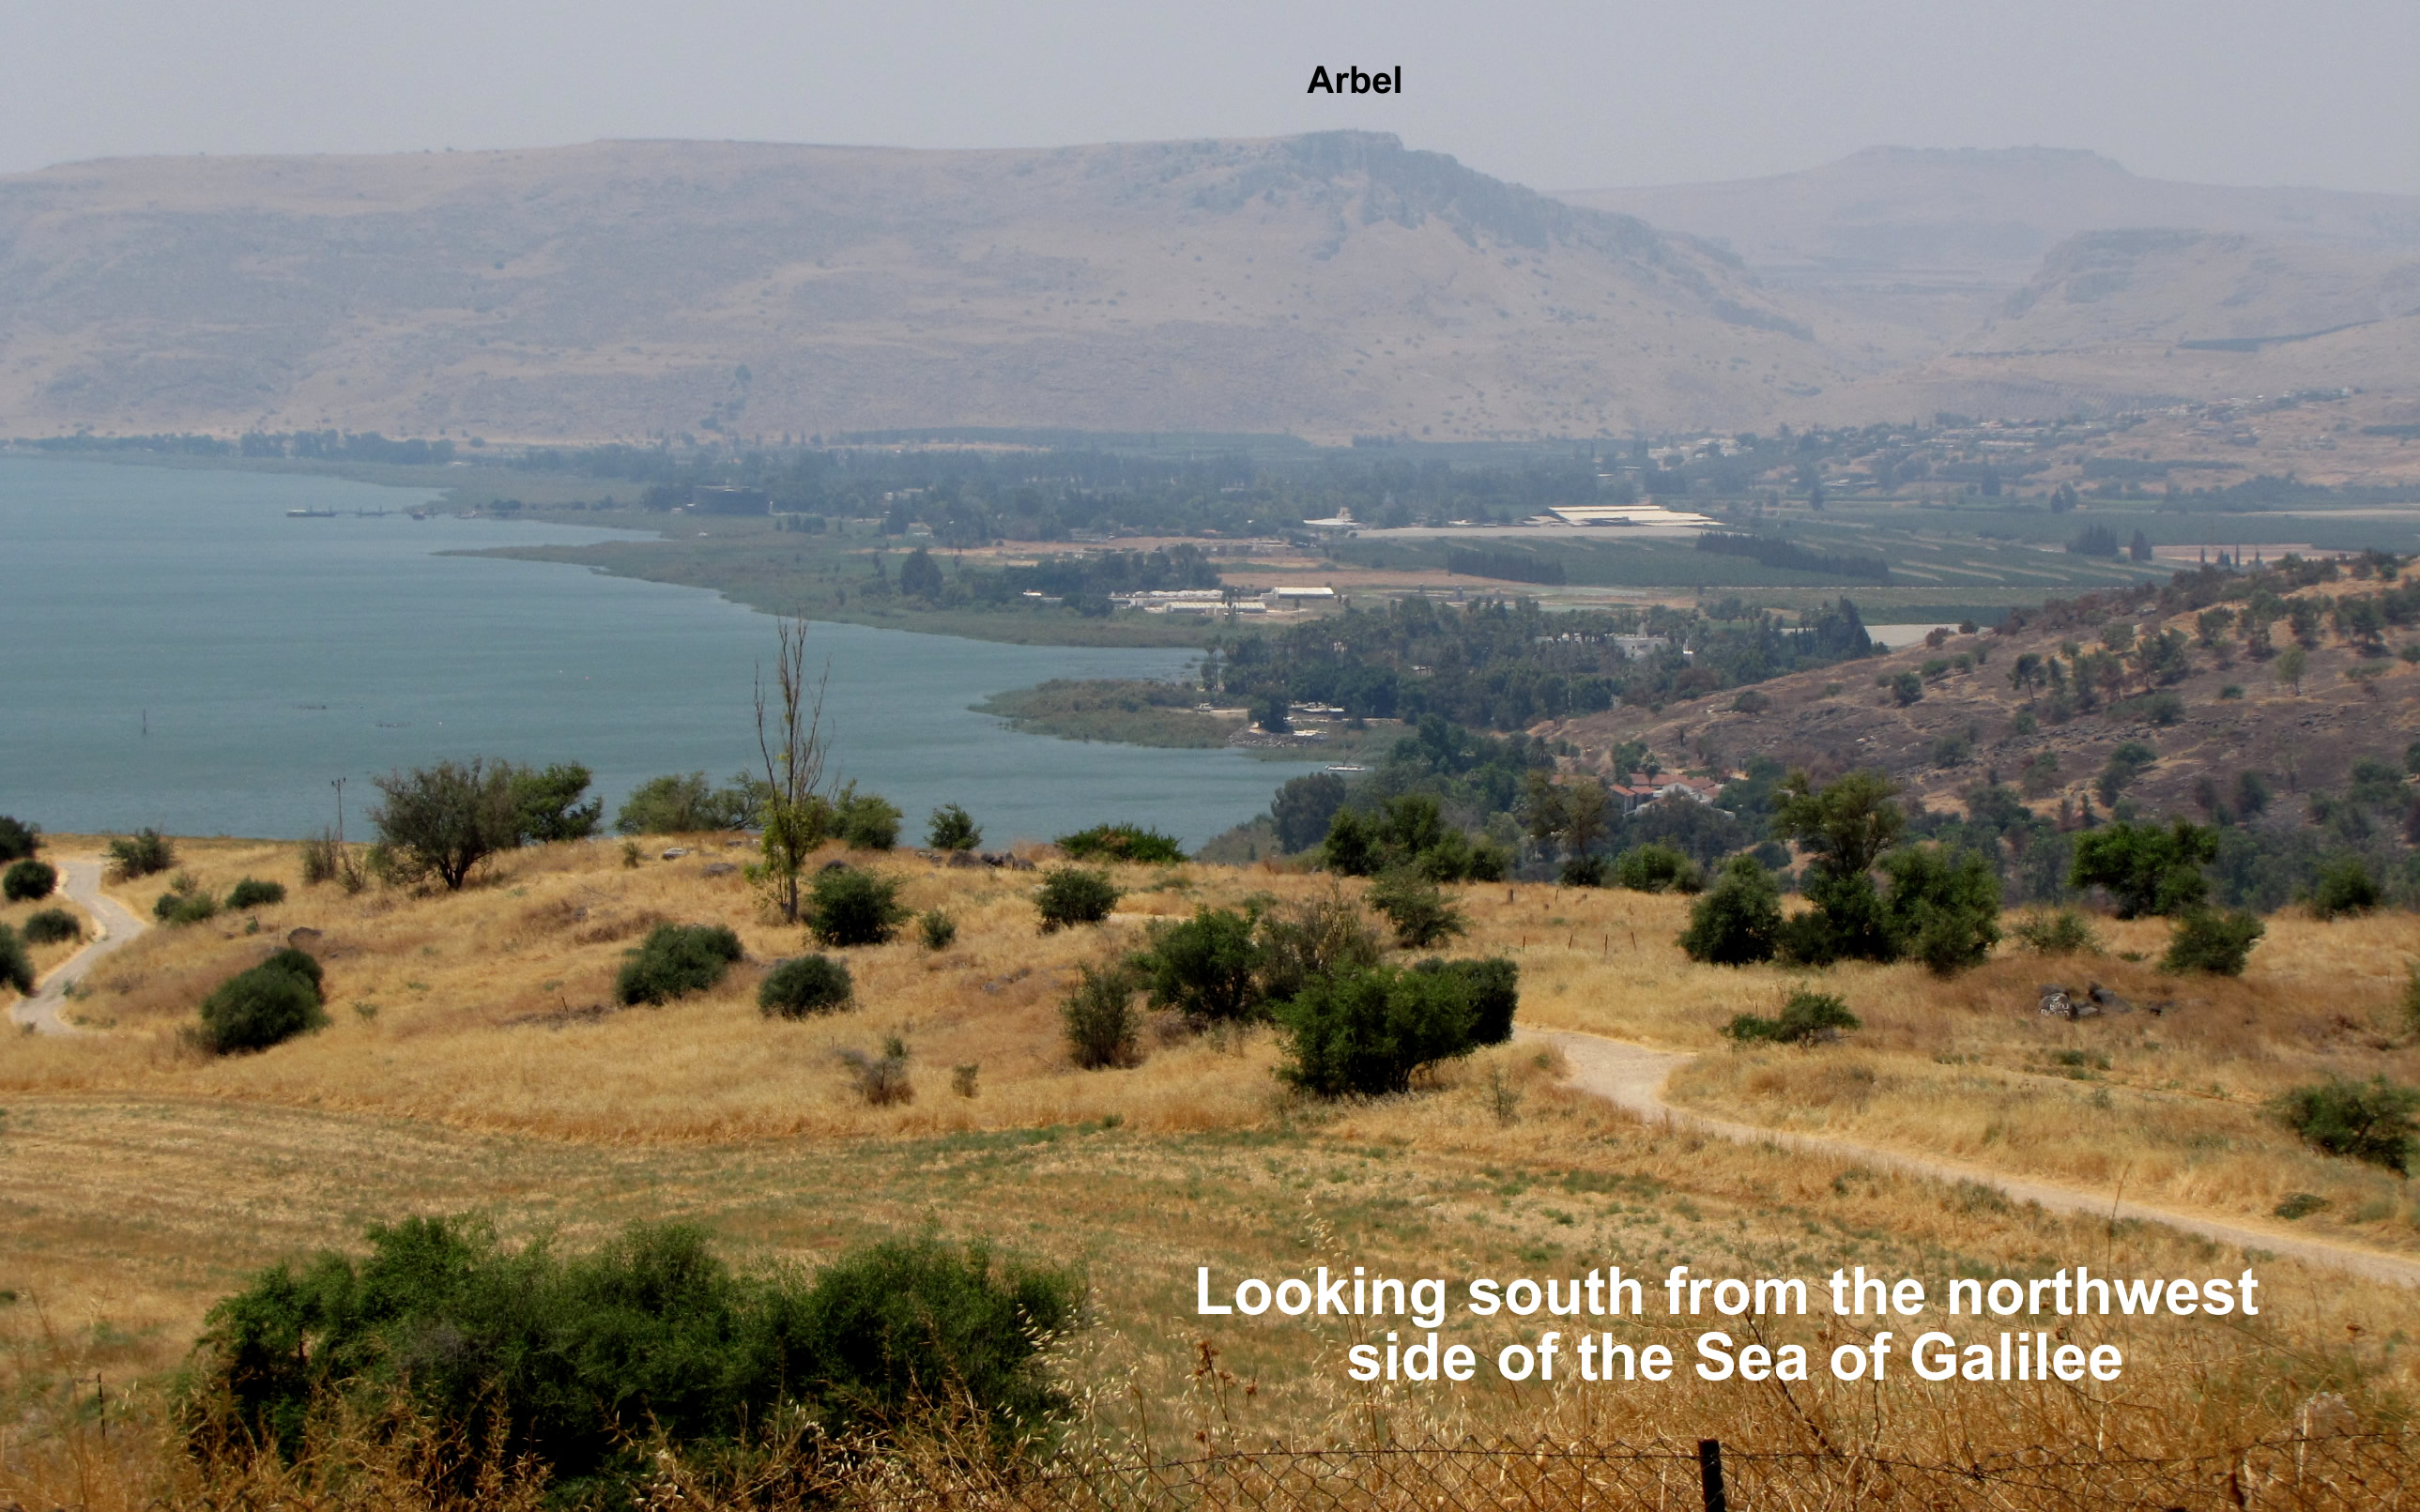 Northwest_looking_south_at_western_coast_of_Sea_of_Galilee